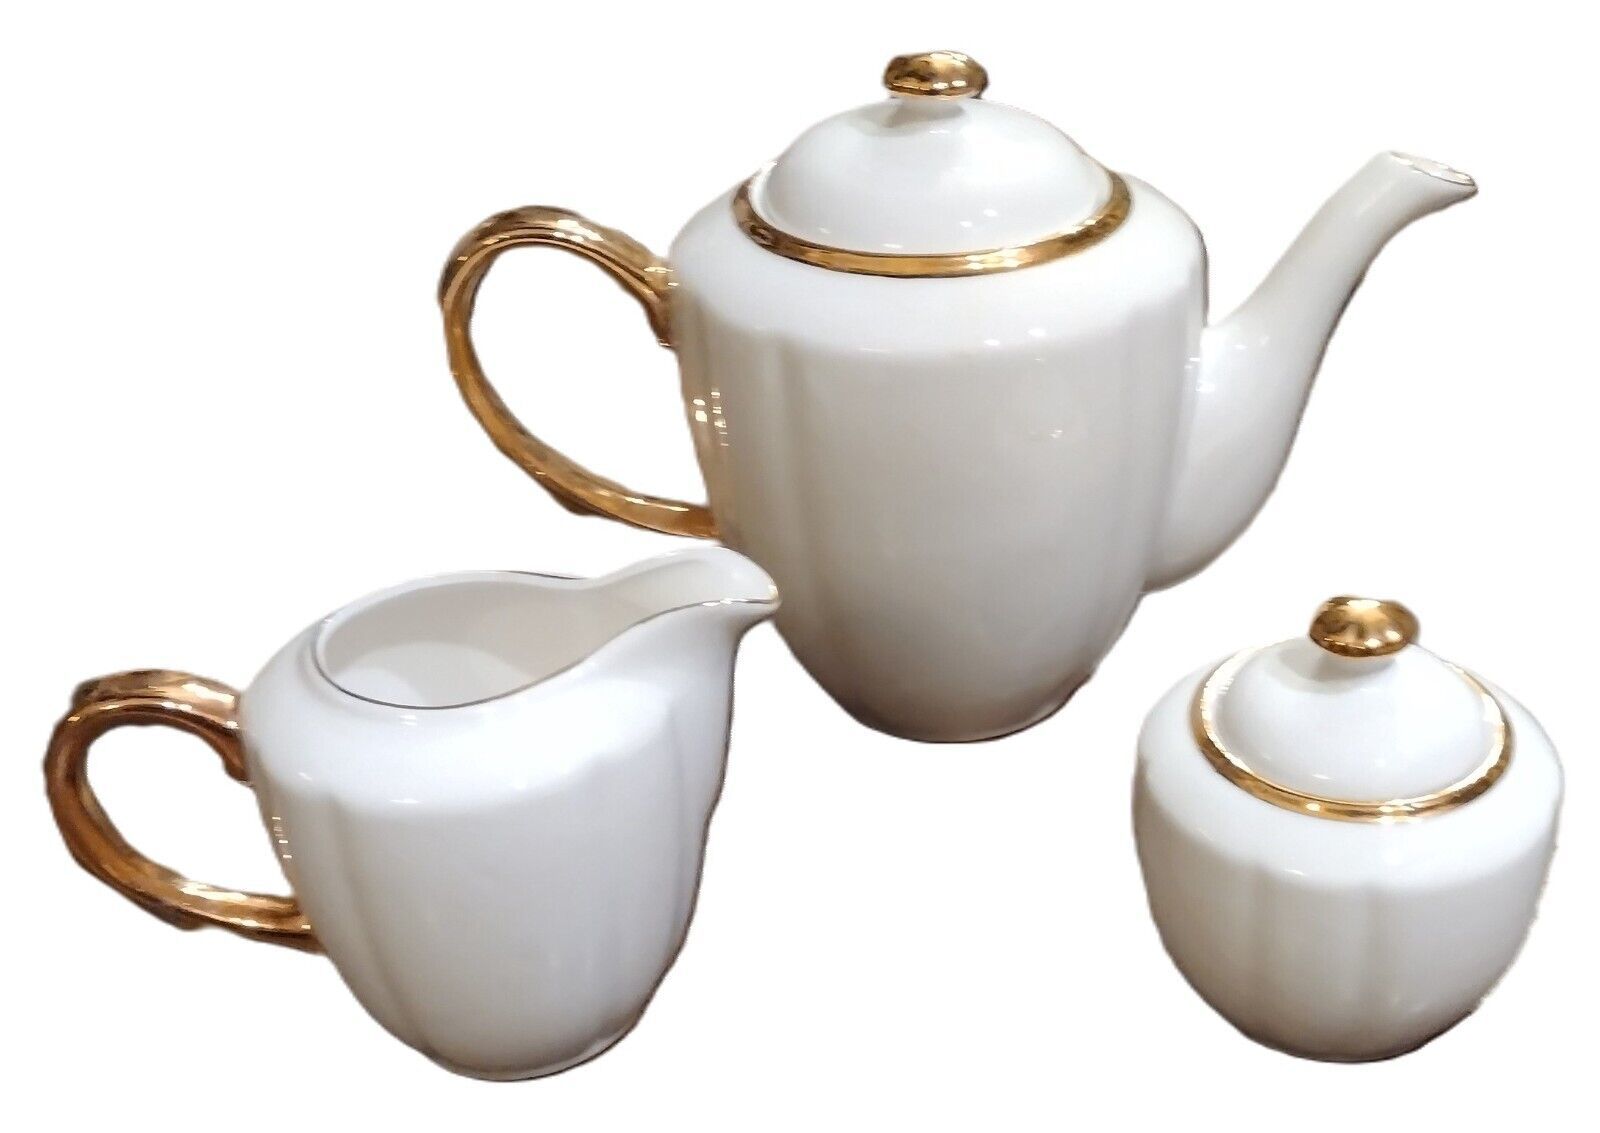 Primary image for Grace's Teaware White Teapot 24k Gold Trim & Matching Creamer & Sugar Bowl 3pc